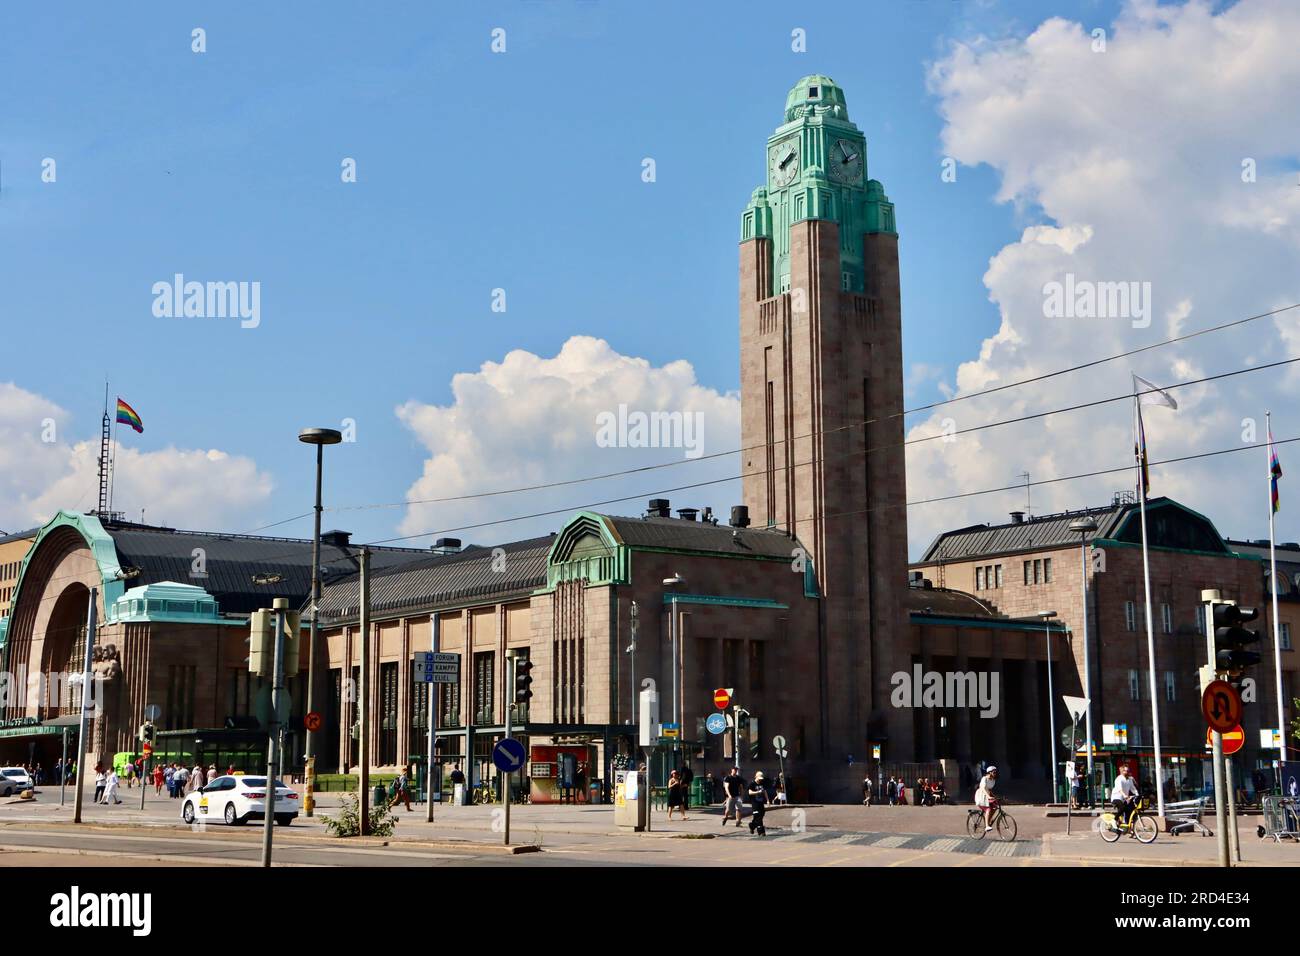 Helsinki Main railway station designed by architect Eliel Saarinen Stock Photo